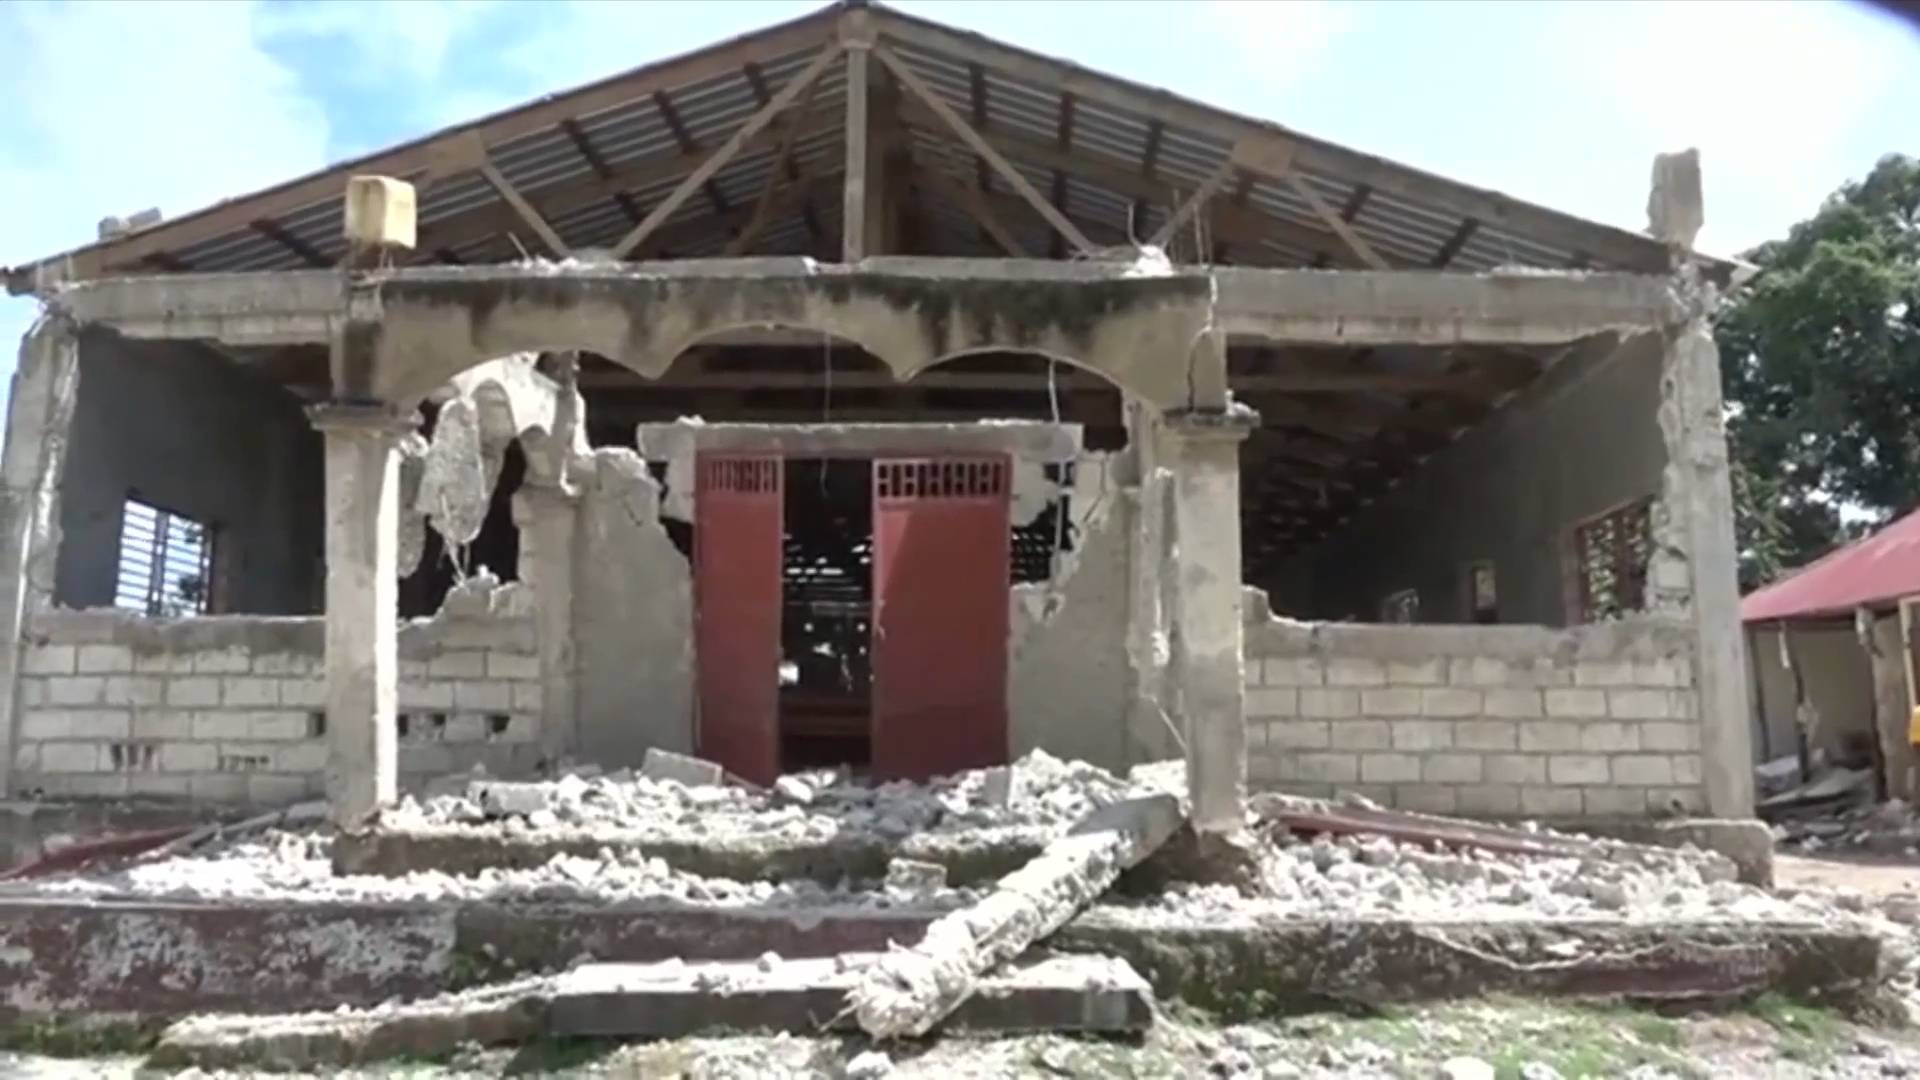 GLOBALink | Damaged roads impede aid in quake-hit remote Haiti